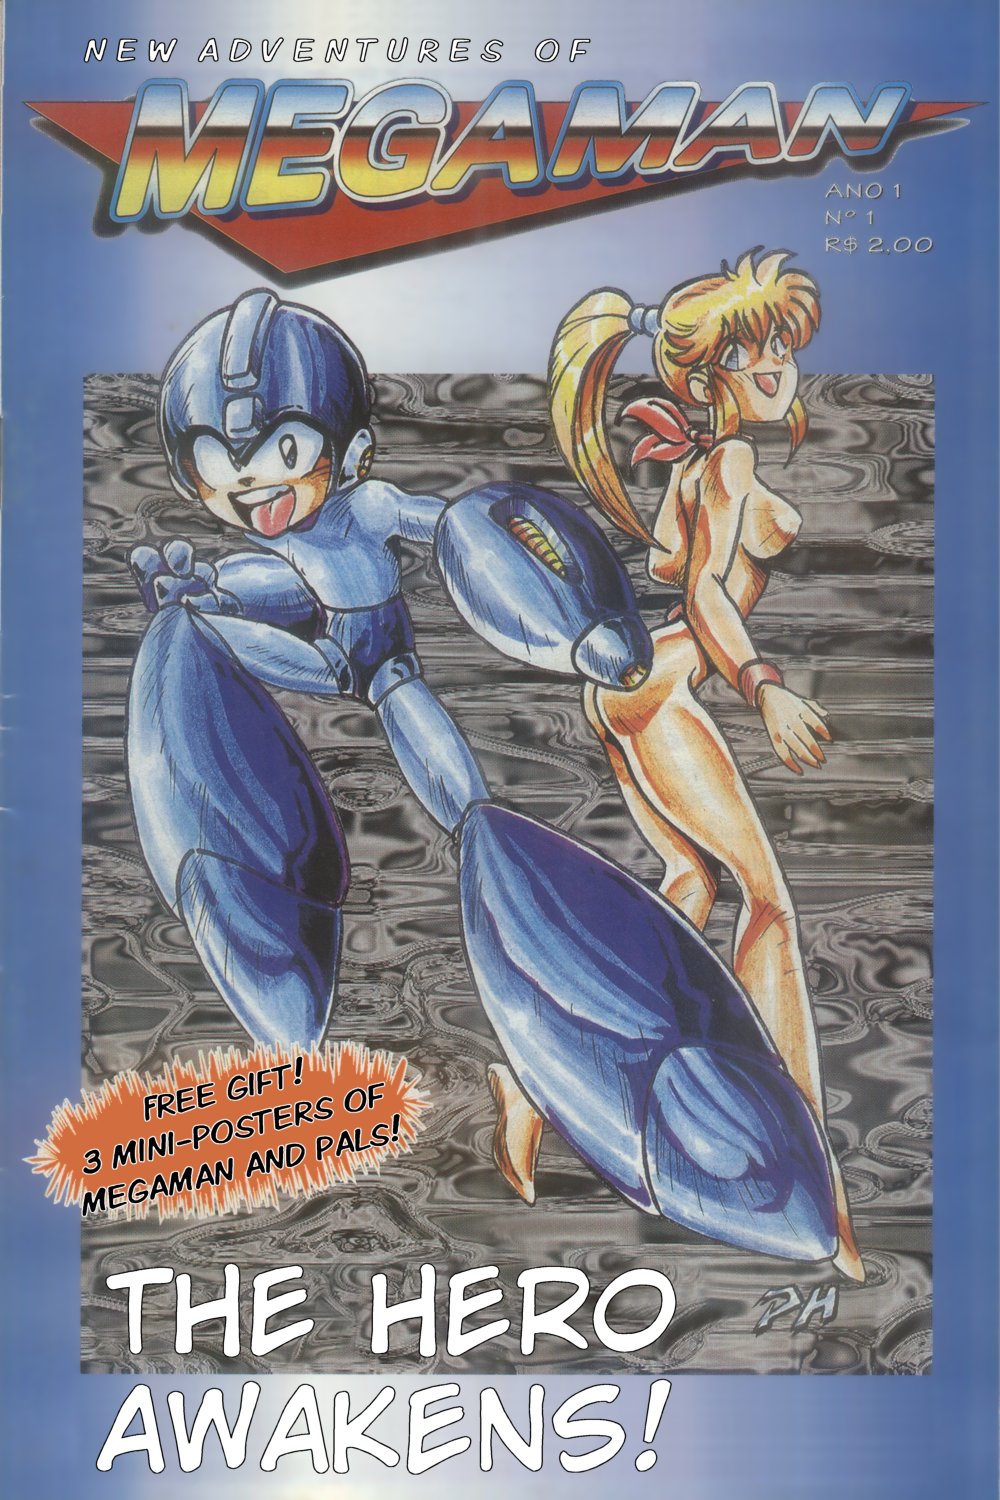 Novas Aventuras de Megaman Issue 1.